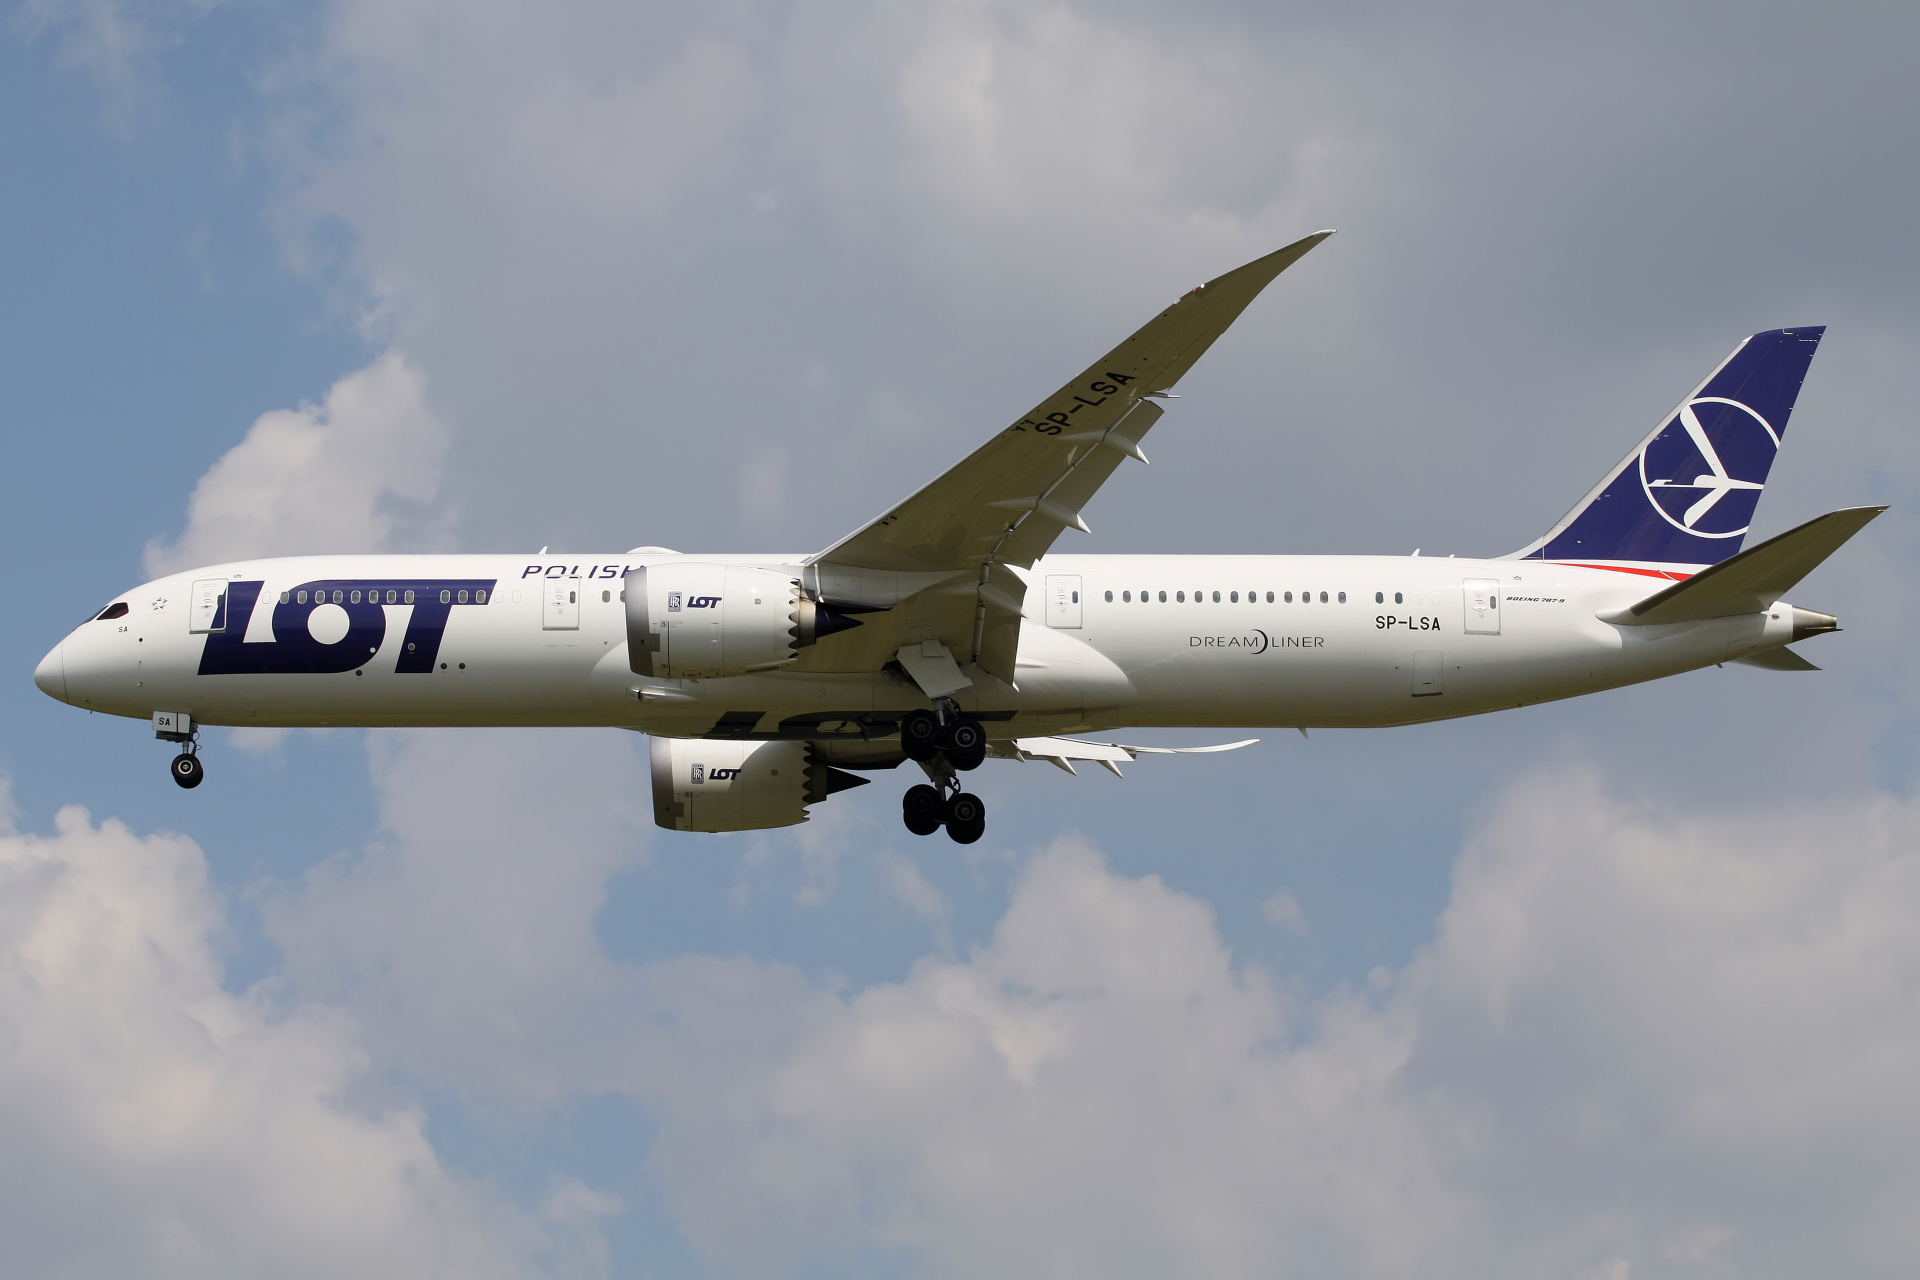 SP-LSA (Aircraft » EPWA Spotting » Boeing 787-9 Dreamliner » LOT Polish Airlines)